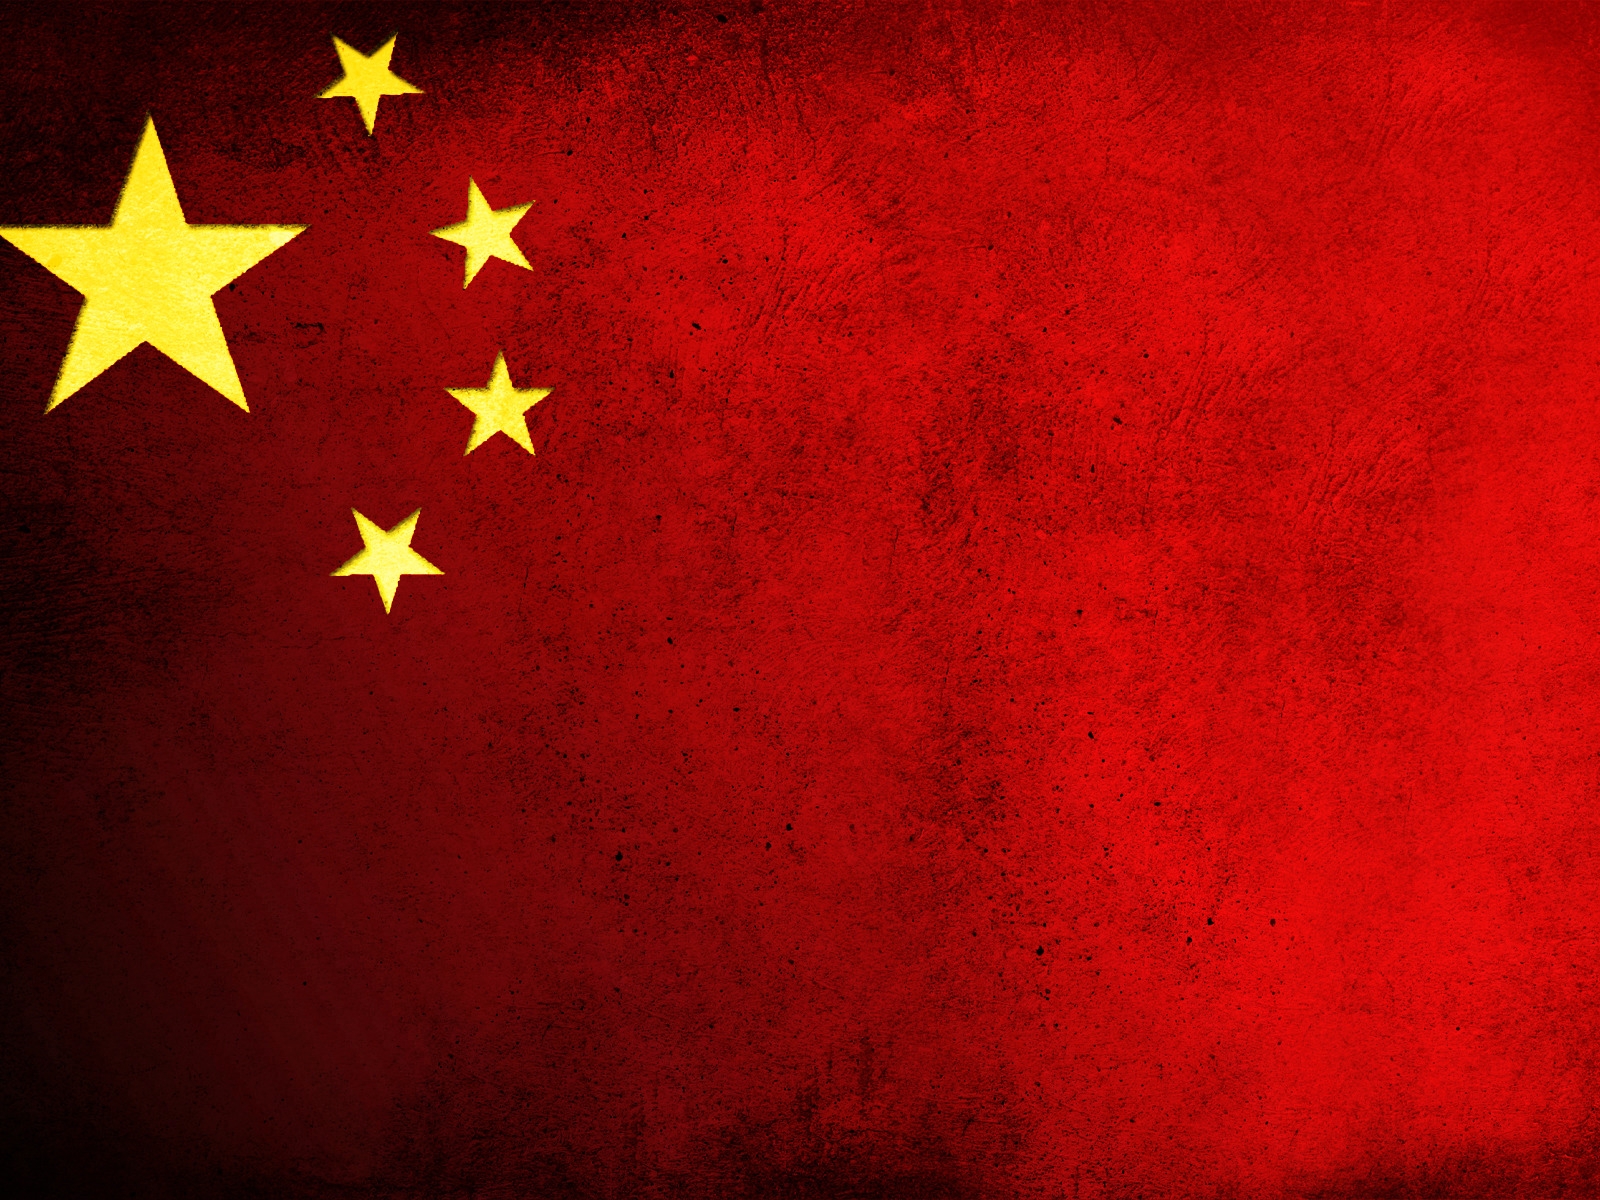 China Flag Digital Art HD Desktop Wallpaper Background